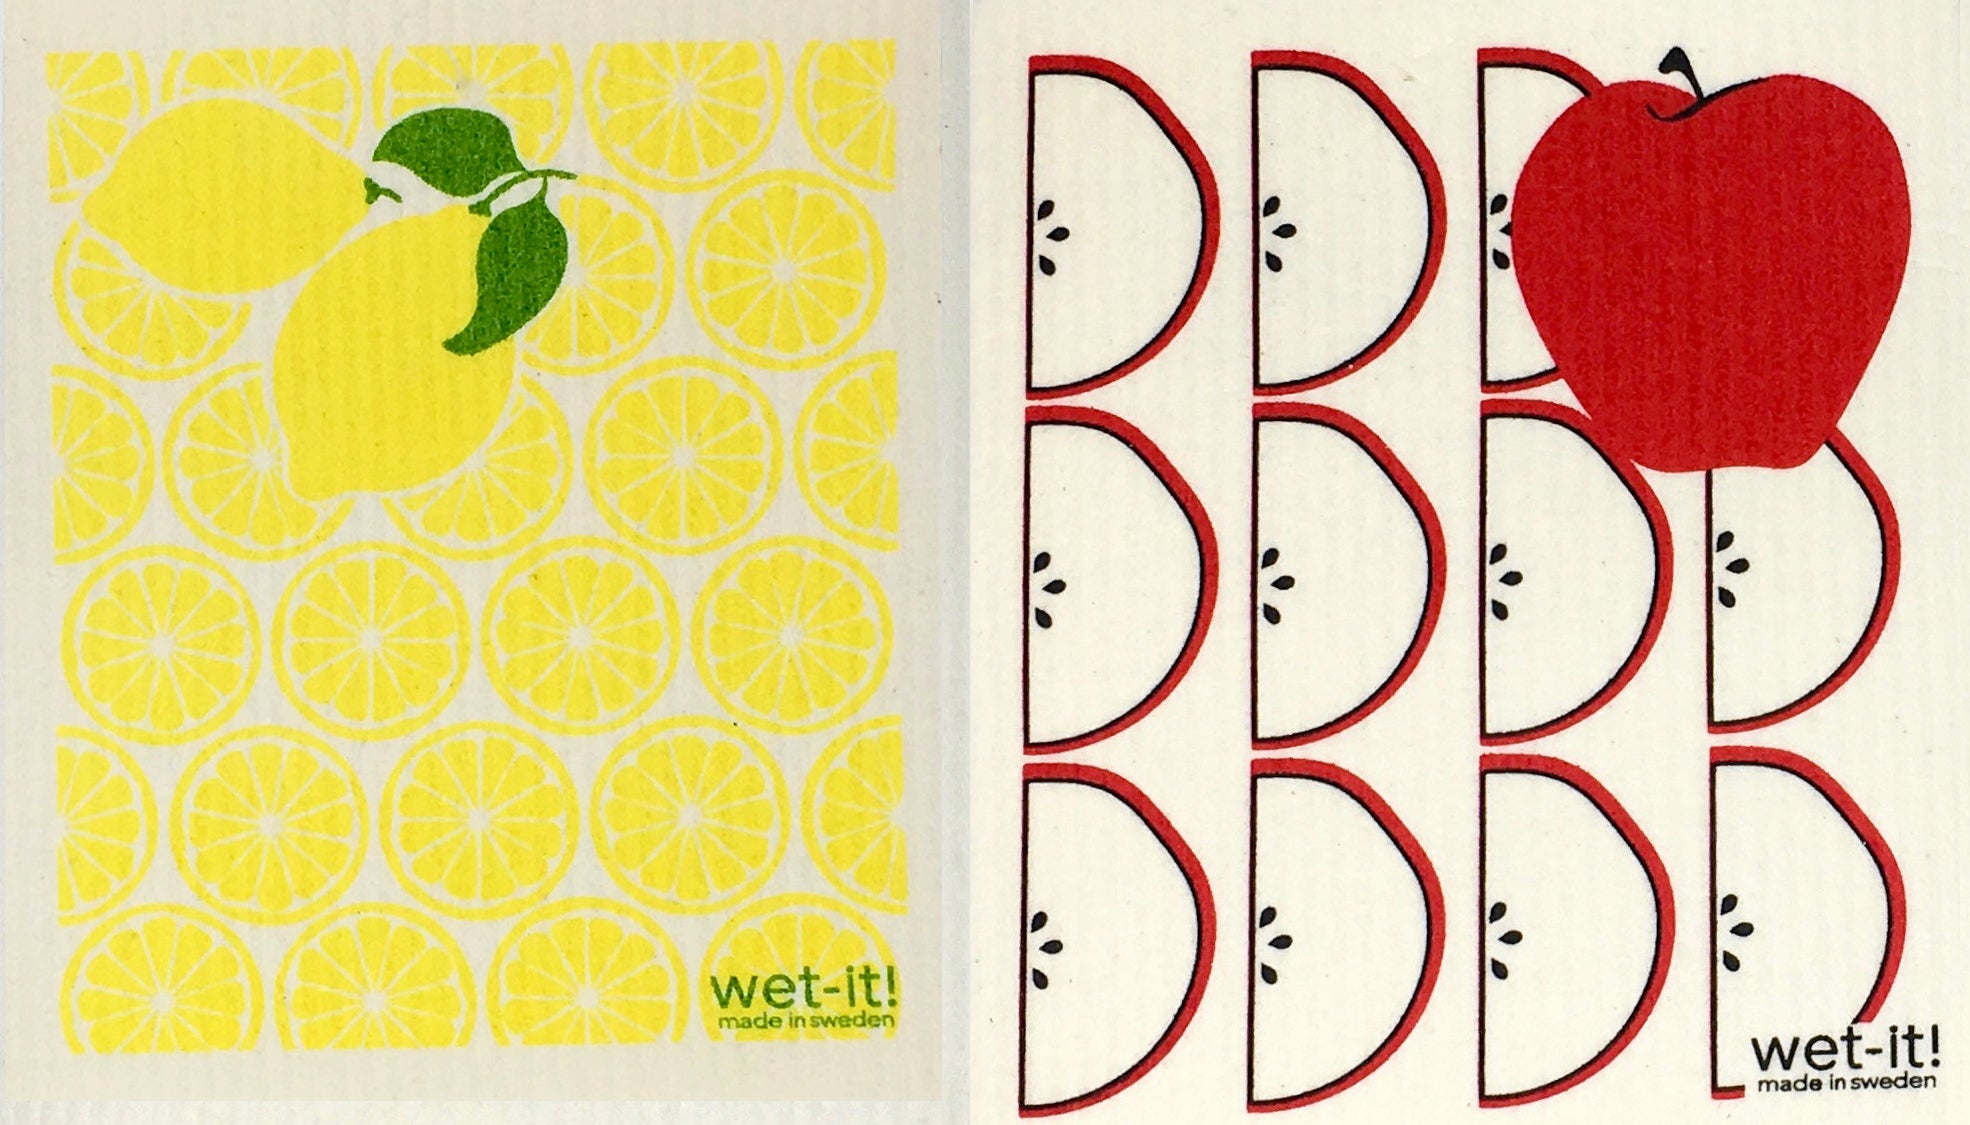 Swedish Treasures Wet-it! Dishcloth & Cleaning Cloth - 2 packs - Lemon & Apple